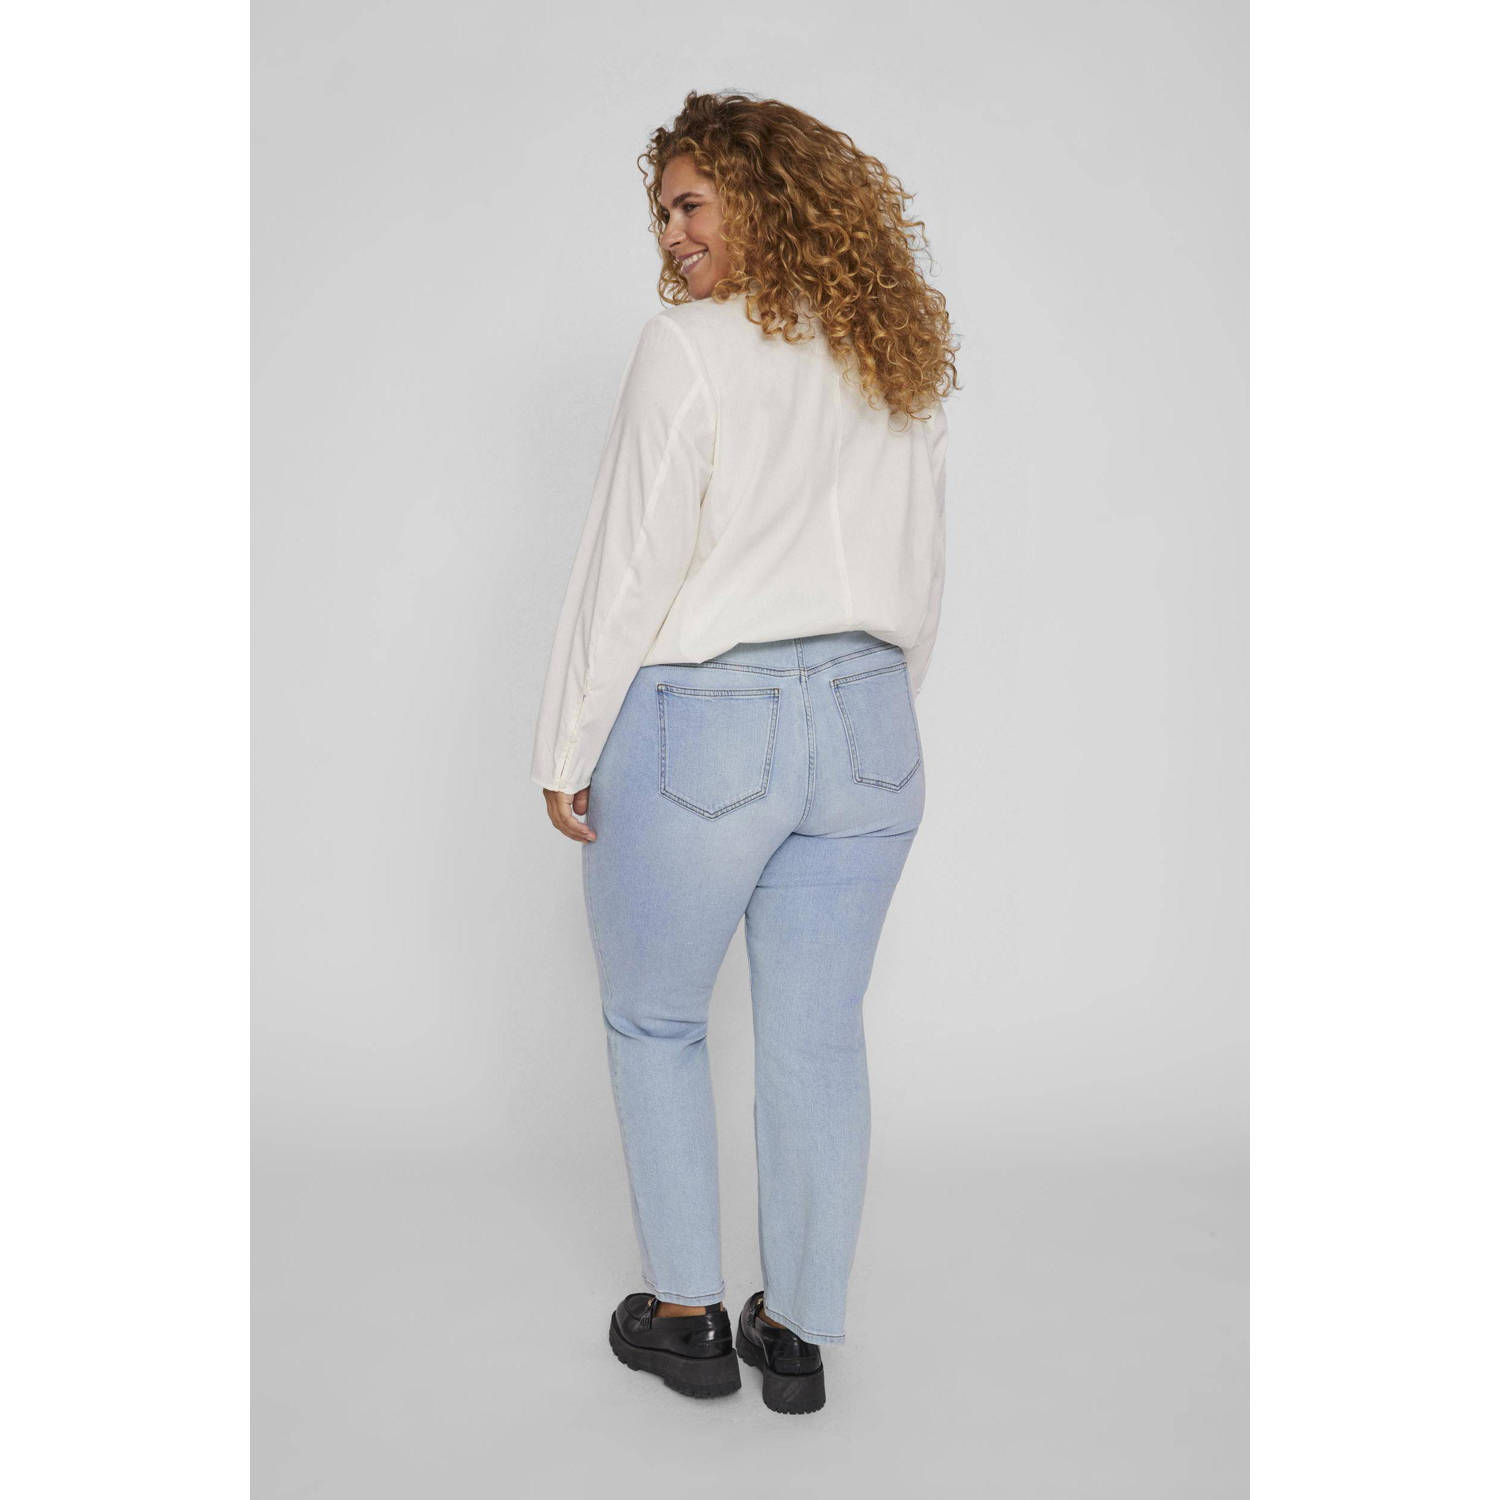 EVOKED VILA high waist slim fit jeans VINORA light blue denim